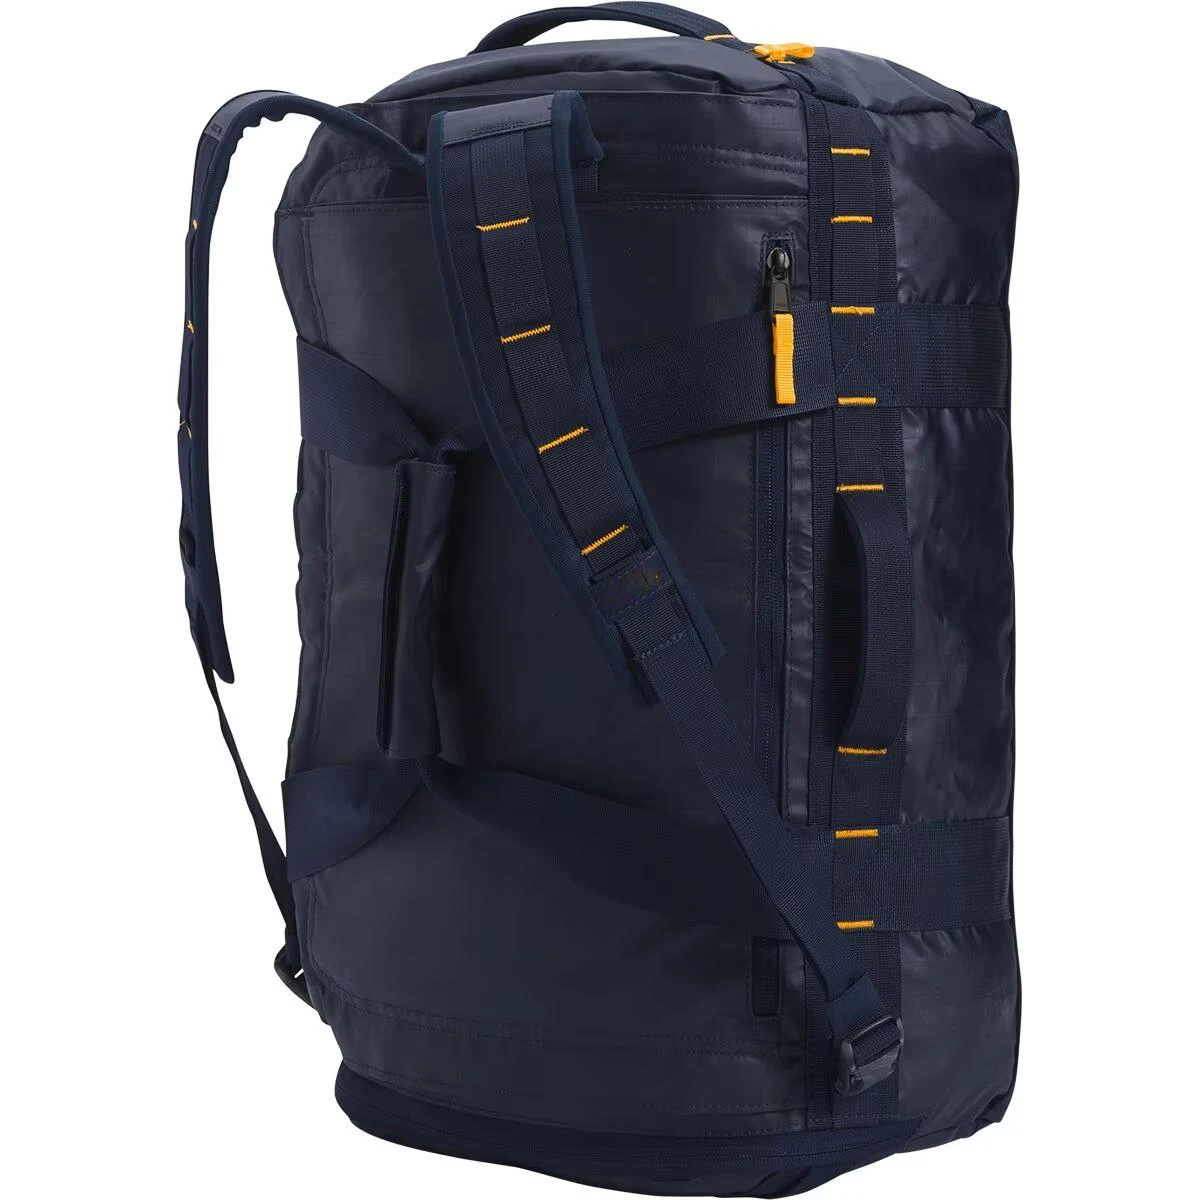 Waterproof Gym Duffel Bag Backpack Sports Duffel Bags Overnight Travel ...